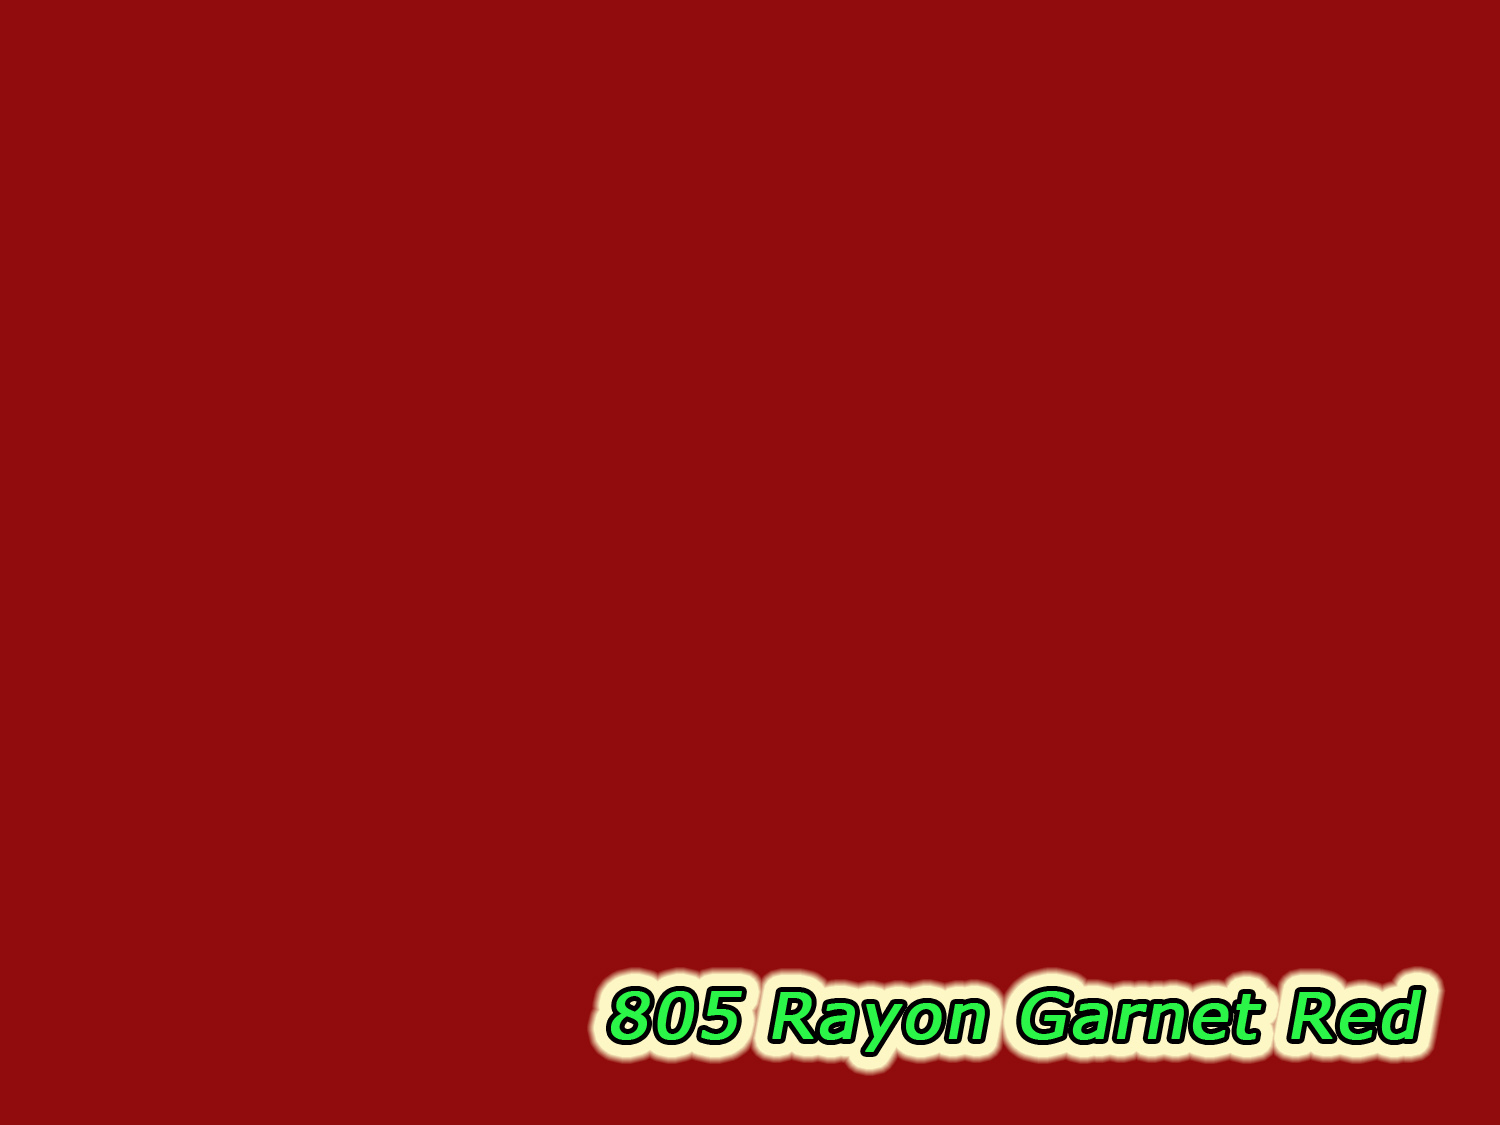 805 Rayon Garnet Red